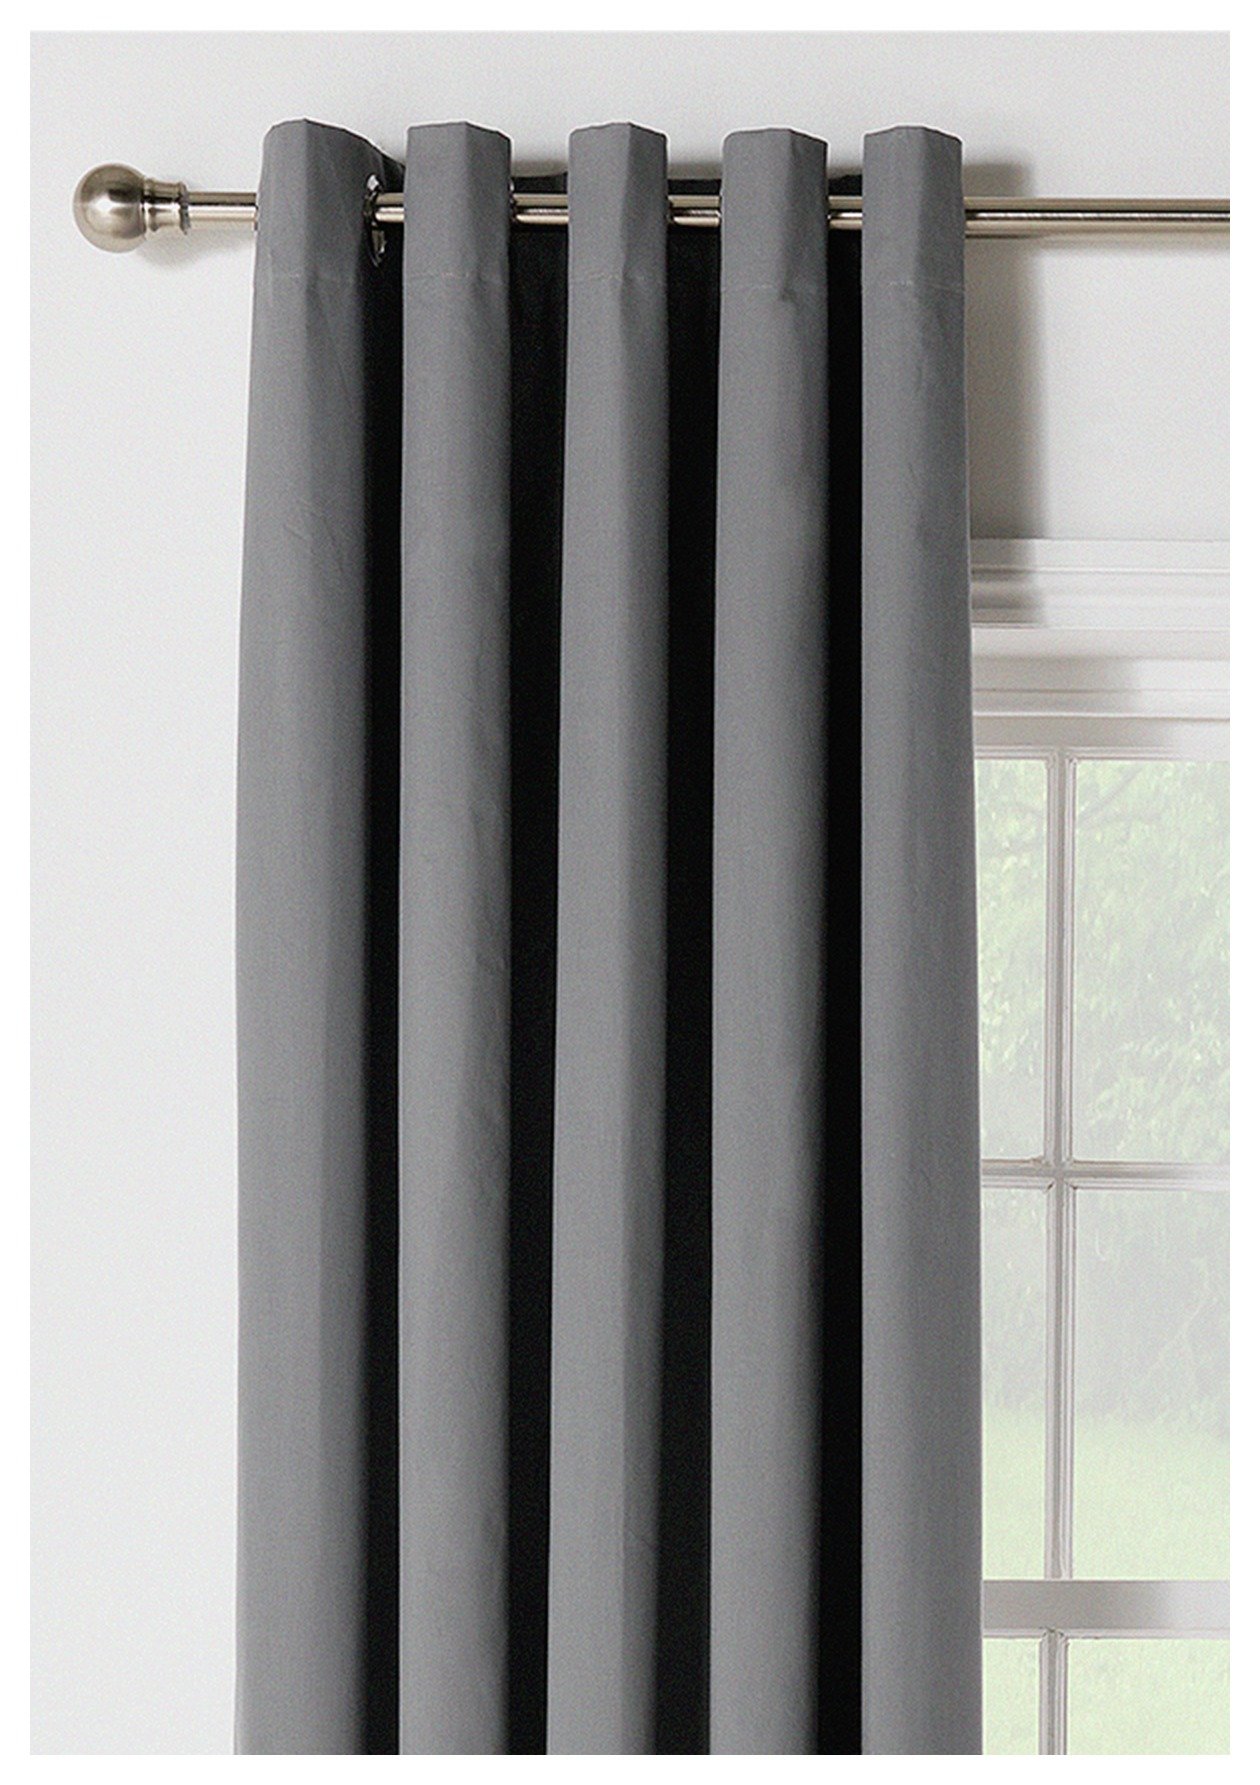 ColourMatch Blackout Curtains - 168x183cm - Flint Grey